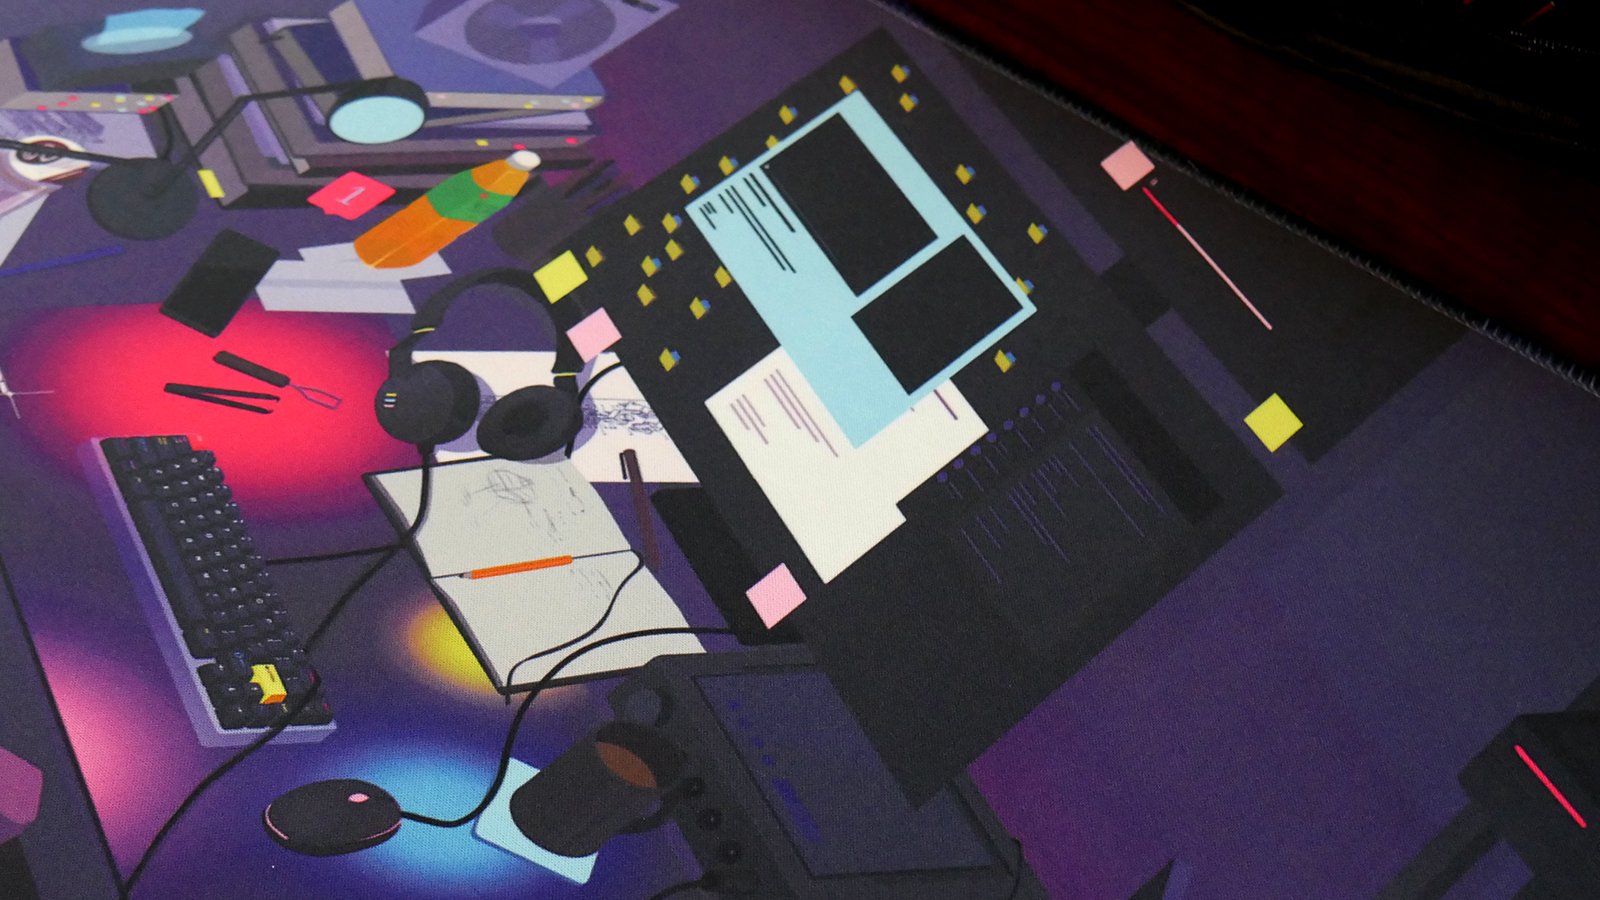 Closeup photo of the deskmat artwork.